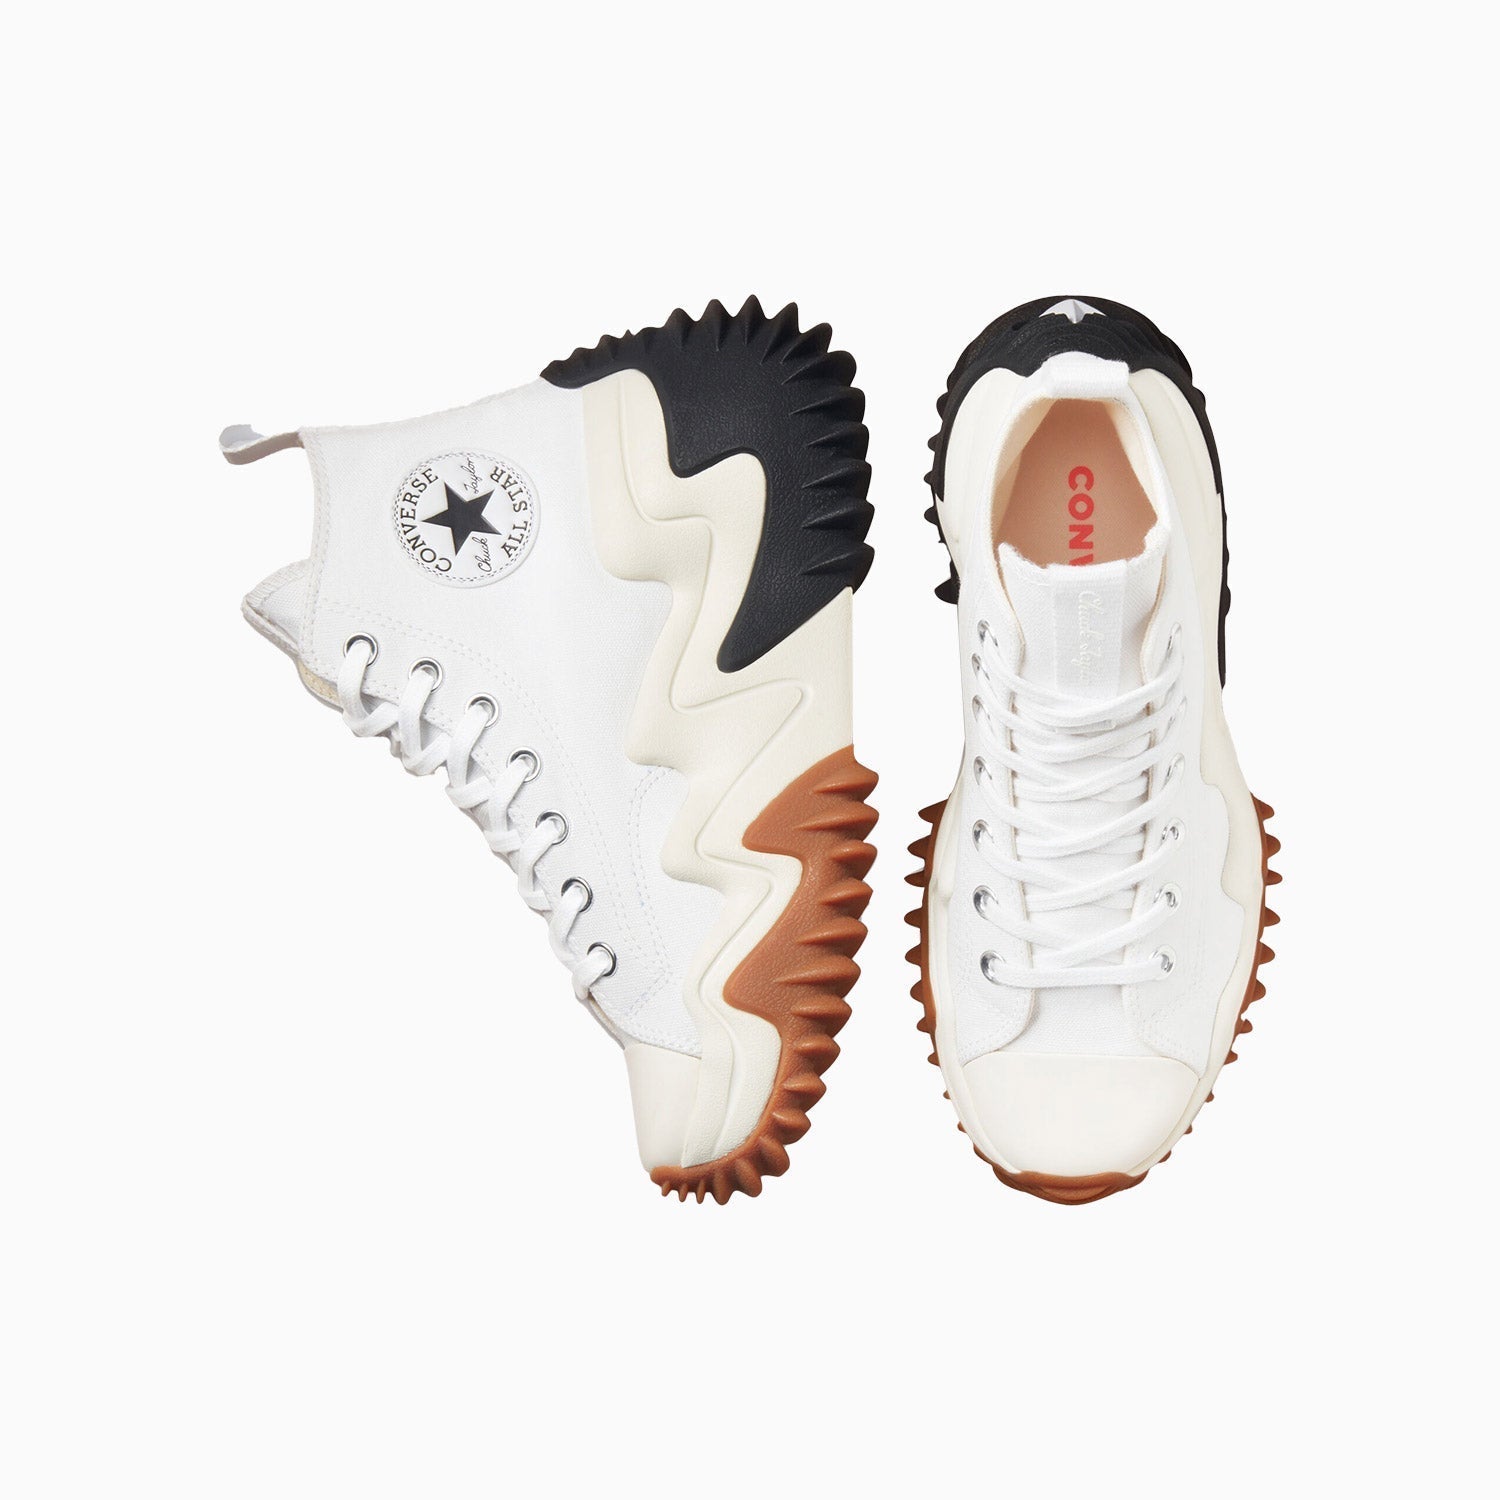 converse-white-platform-run-star-motion-cx-high-top-sneaker-171546c